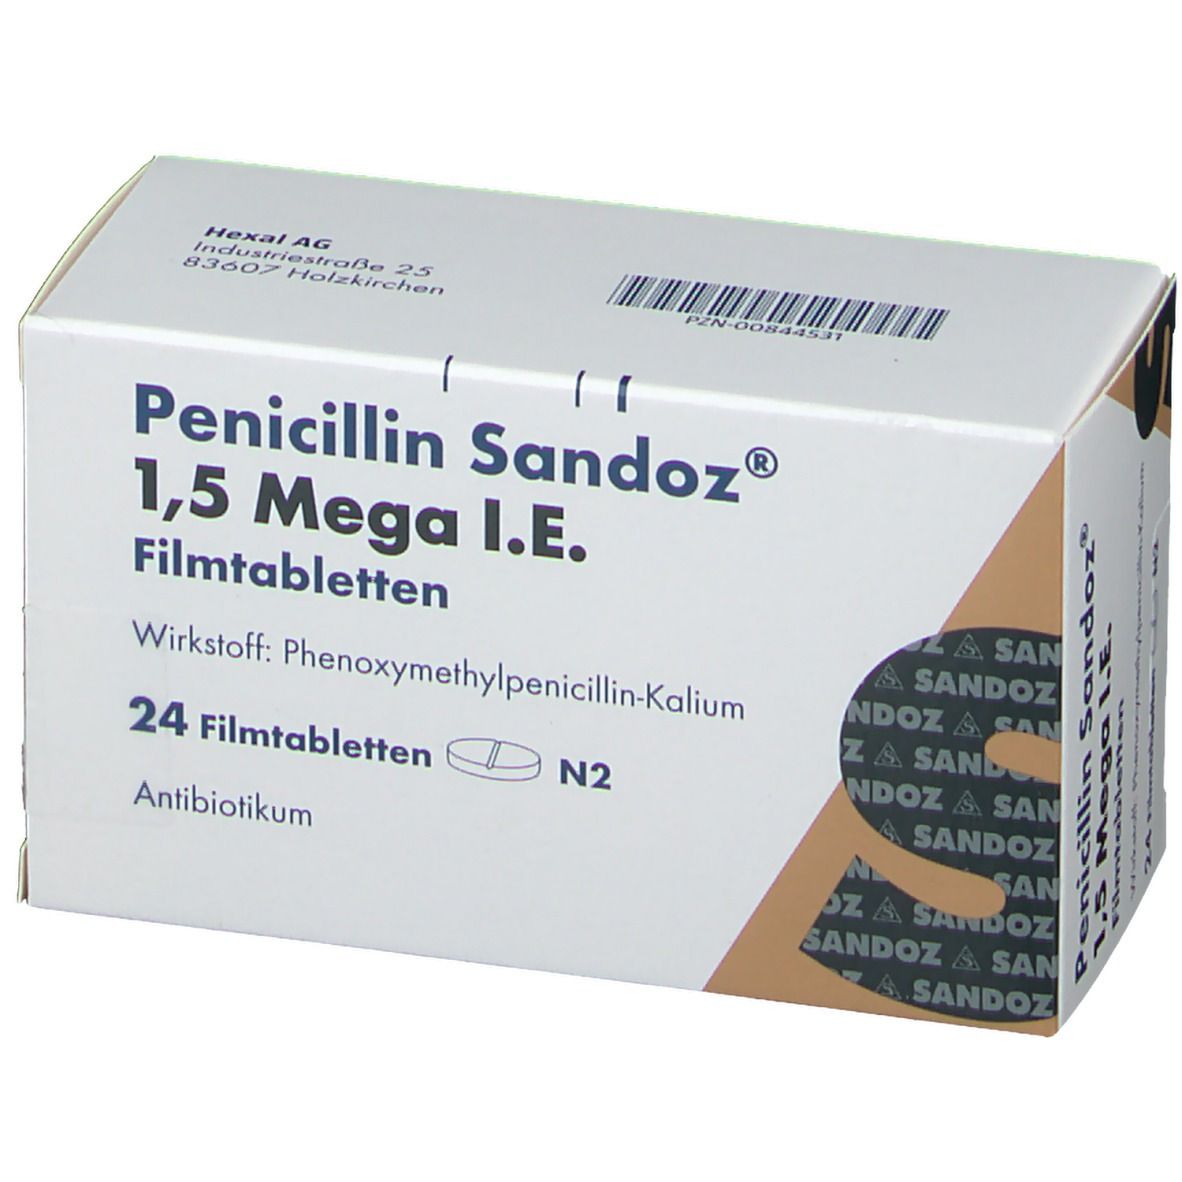 Penicillin Sandoz® 1,5 Mega I.E.